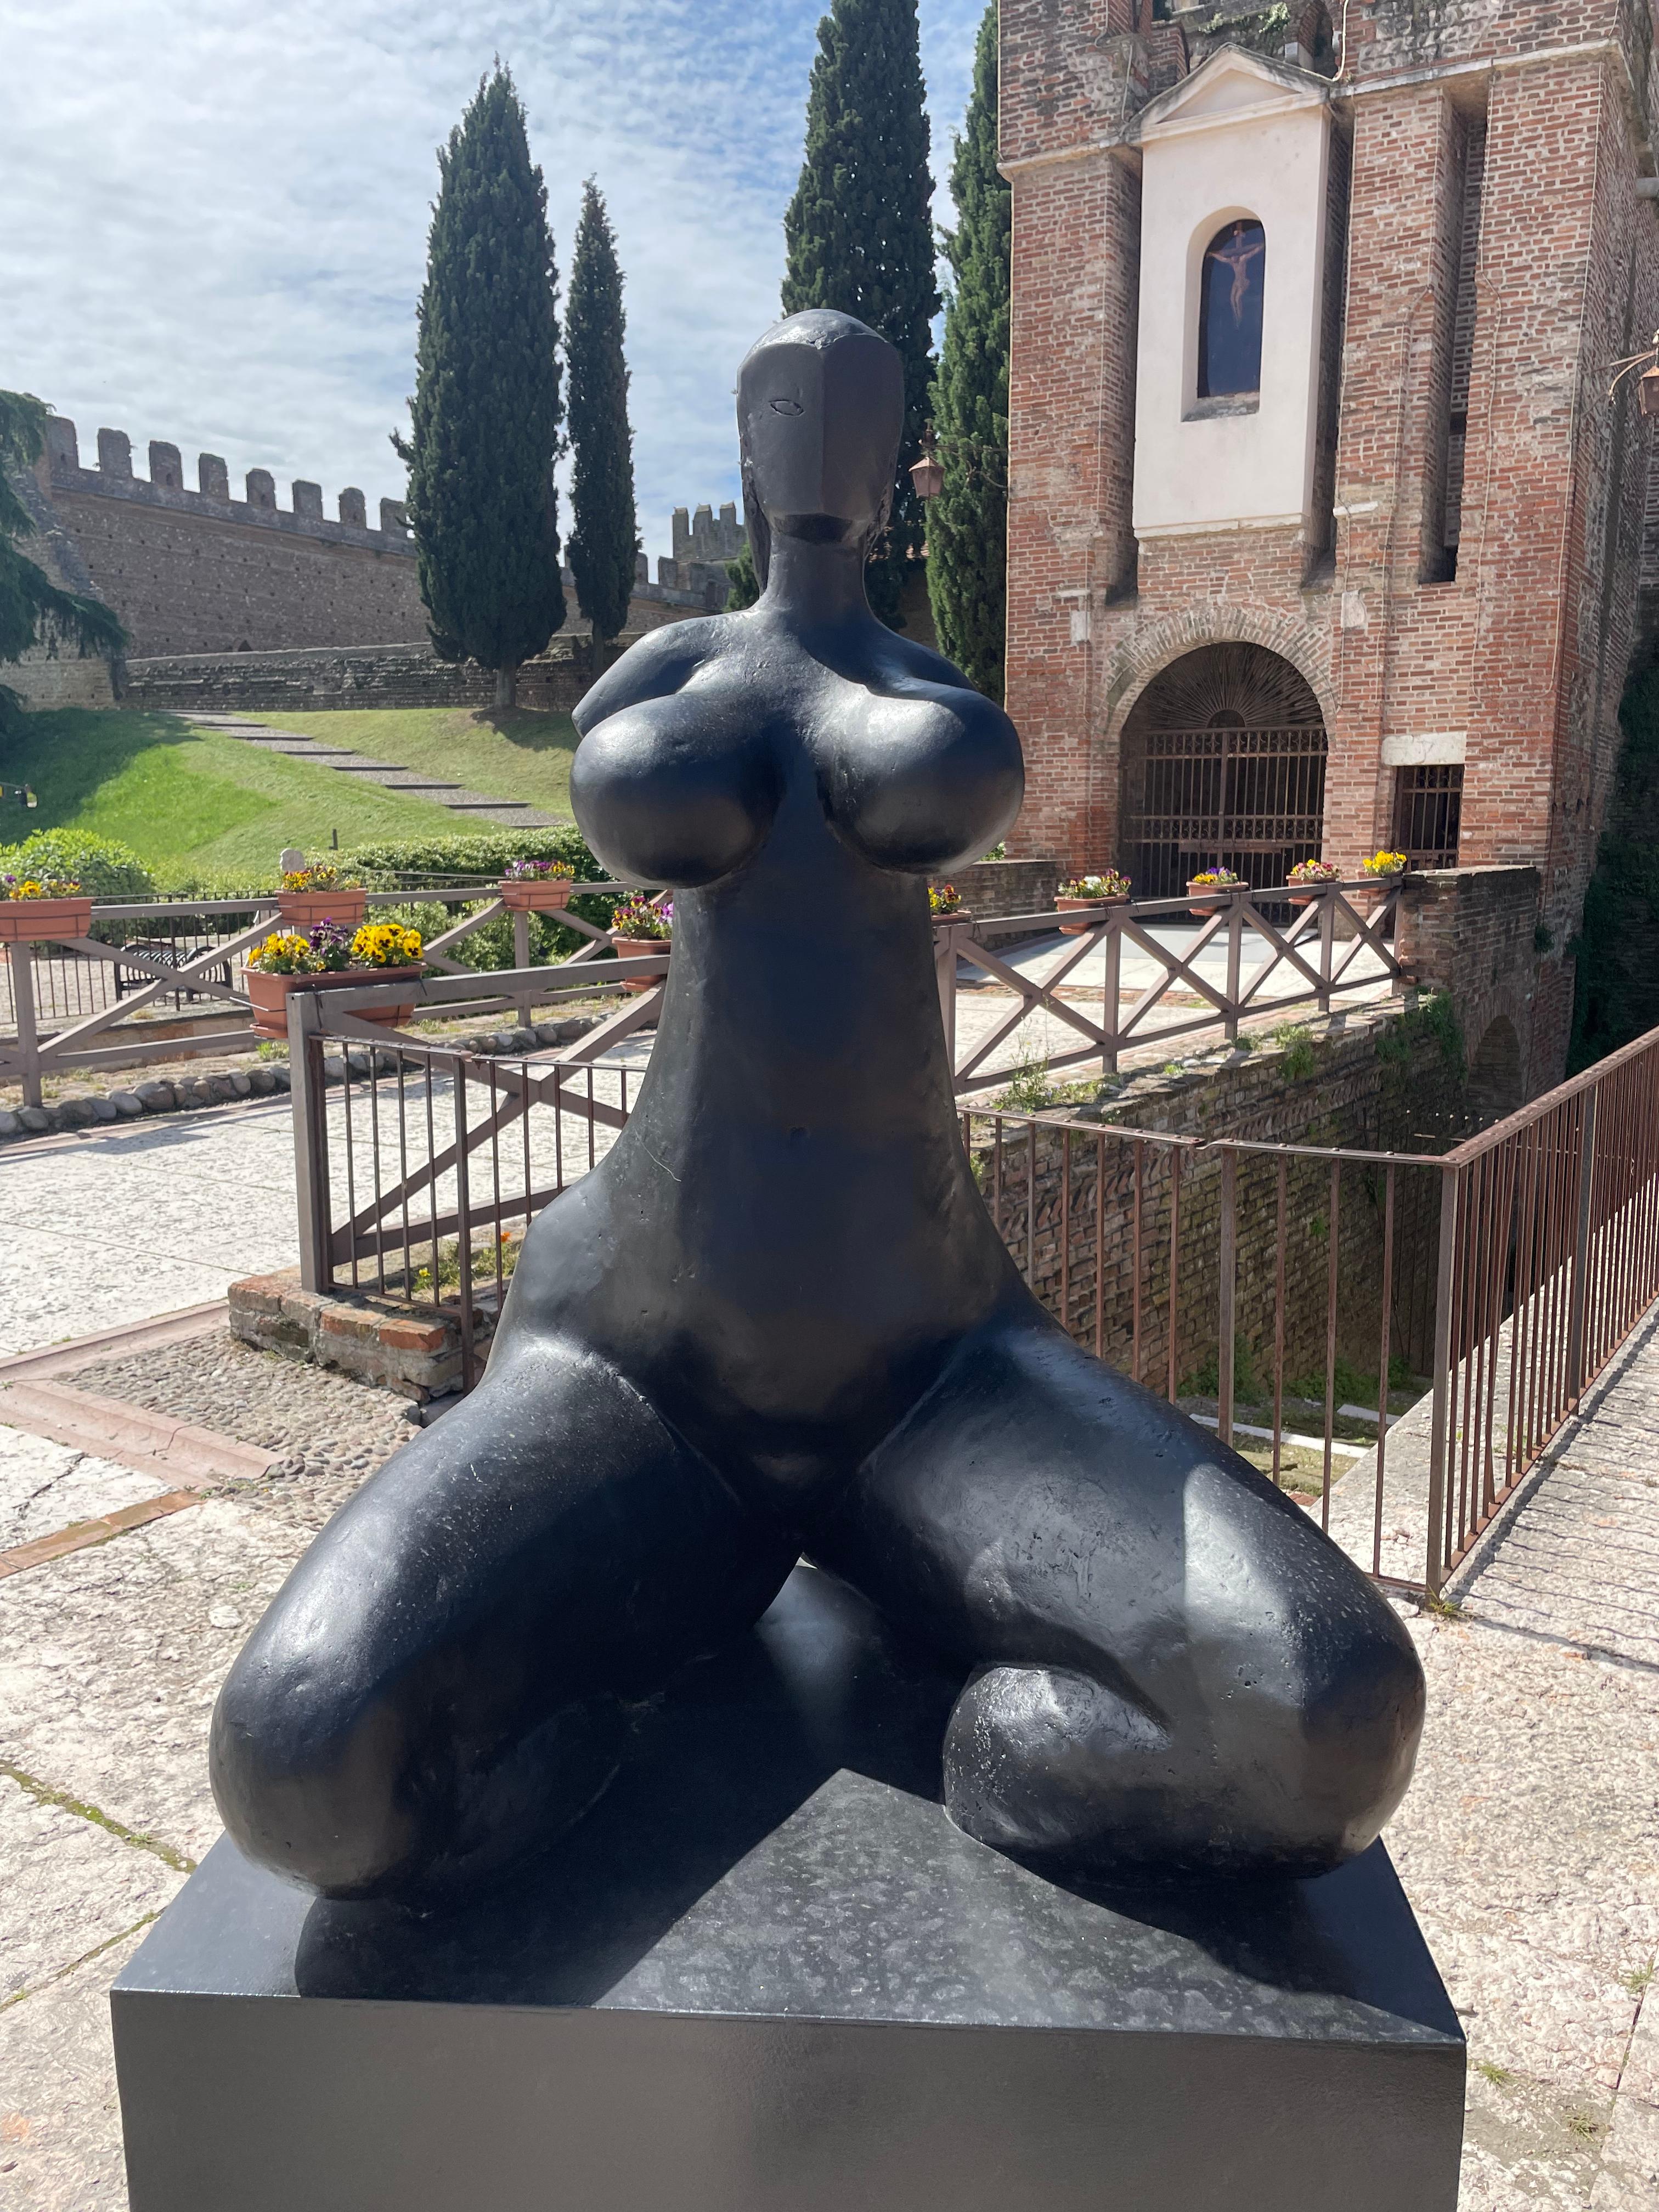 Germinal h cm 110 - Sculpture by Antoniucci Volti